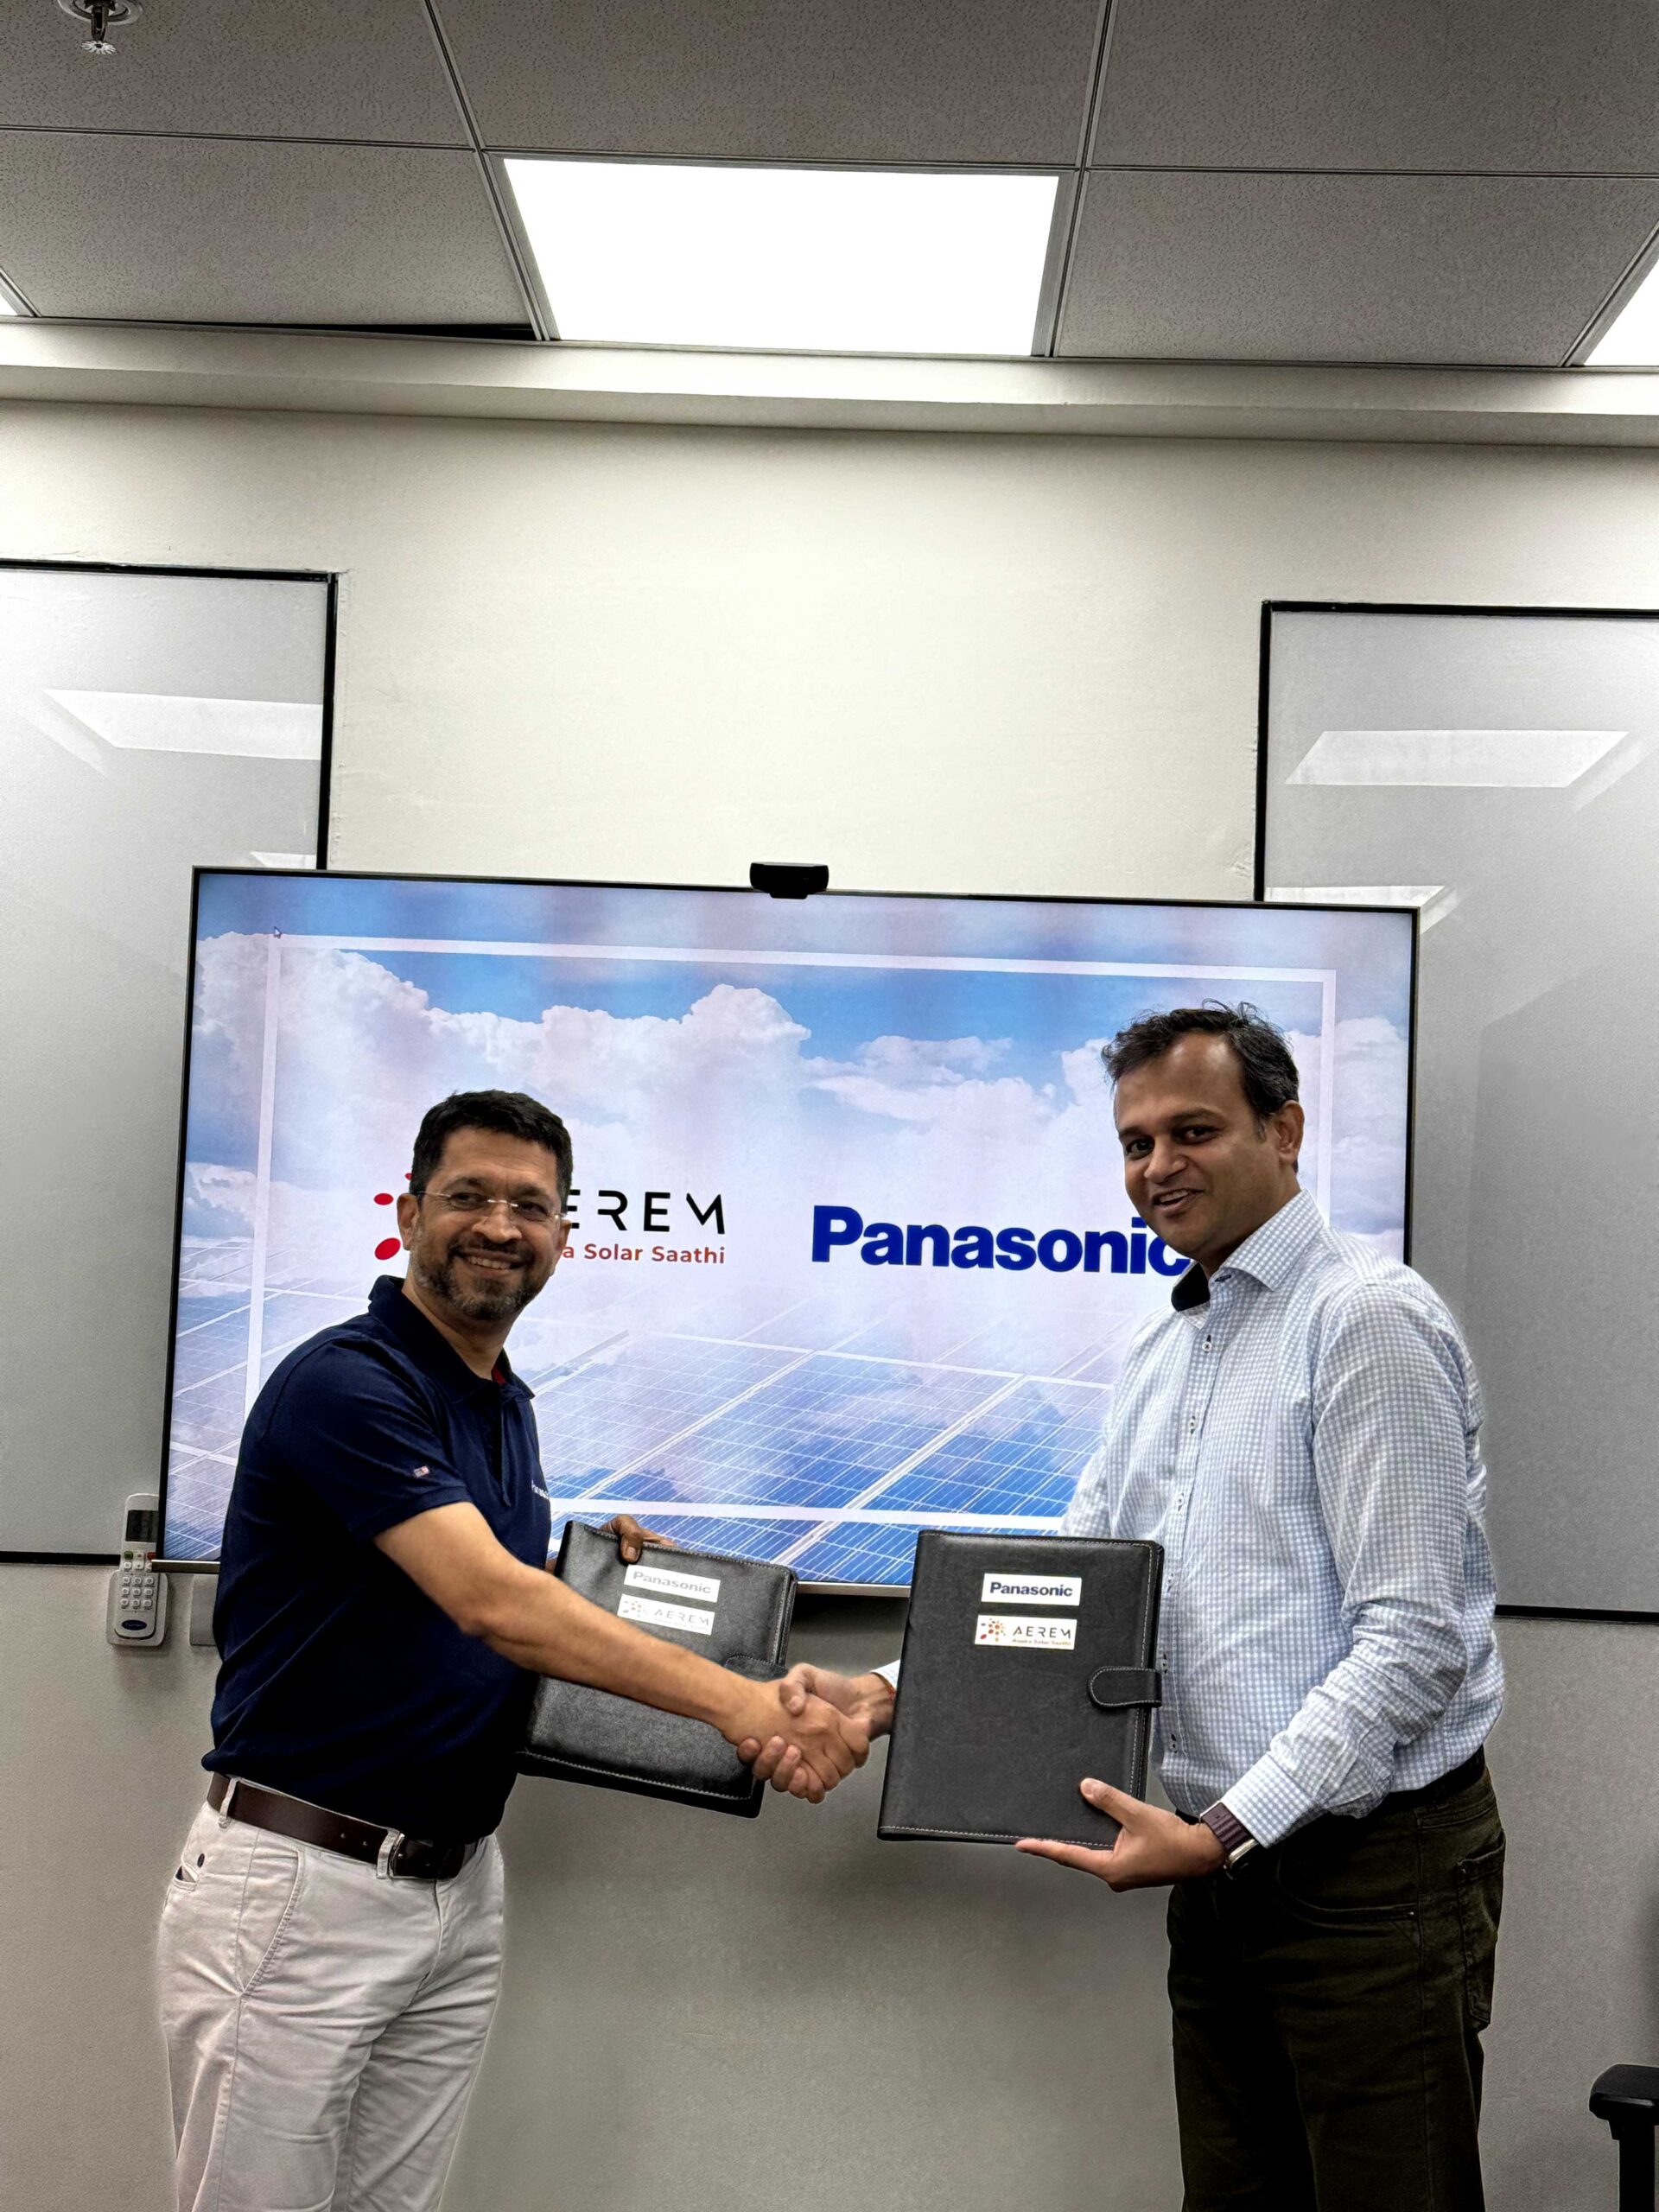 Panasonic Partners With Aerem to Provide Financing to Its Solar Customers - machineinsider.com